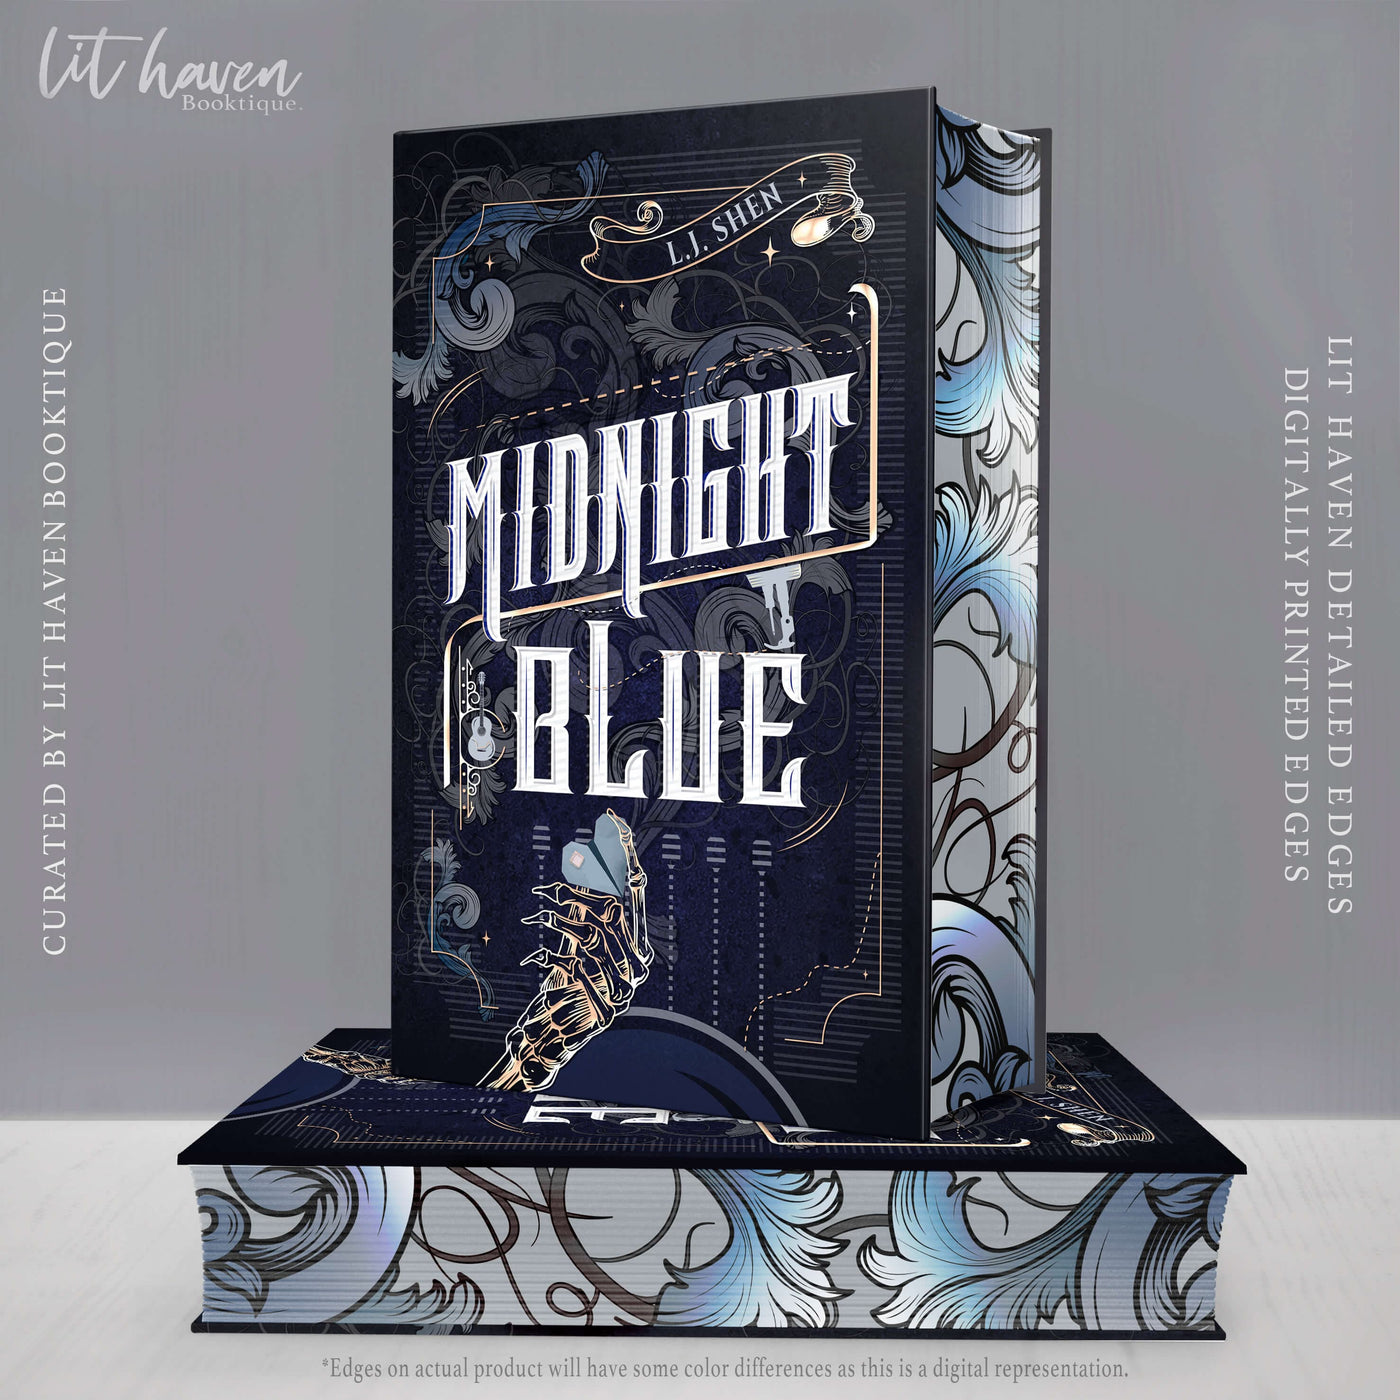 Lit Haven Booktique Book Digitally Printed Edges / No Edges BUNDLE - Midnight Blue + Devious Lies